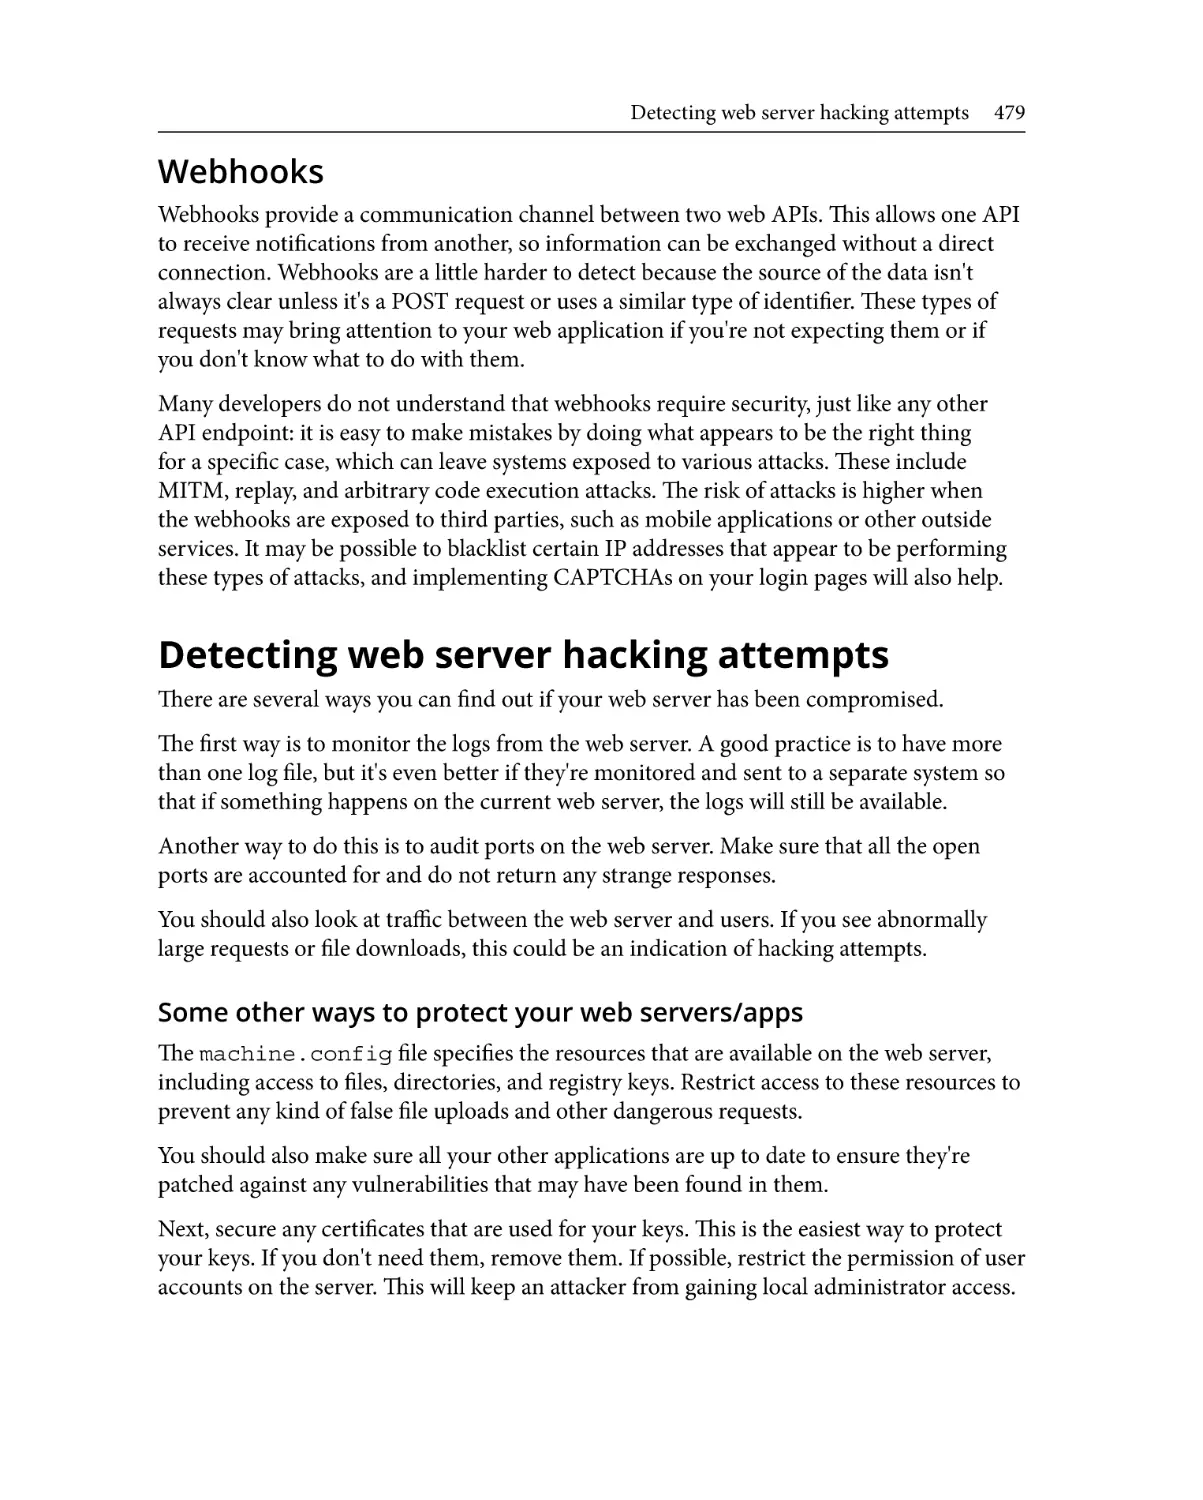 Webhooks
Detecting web server hacking attempts